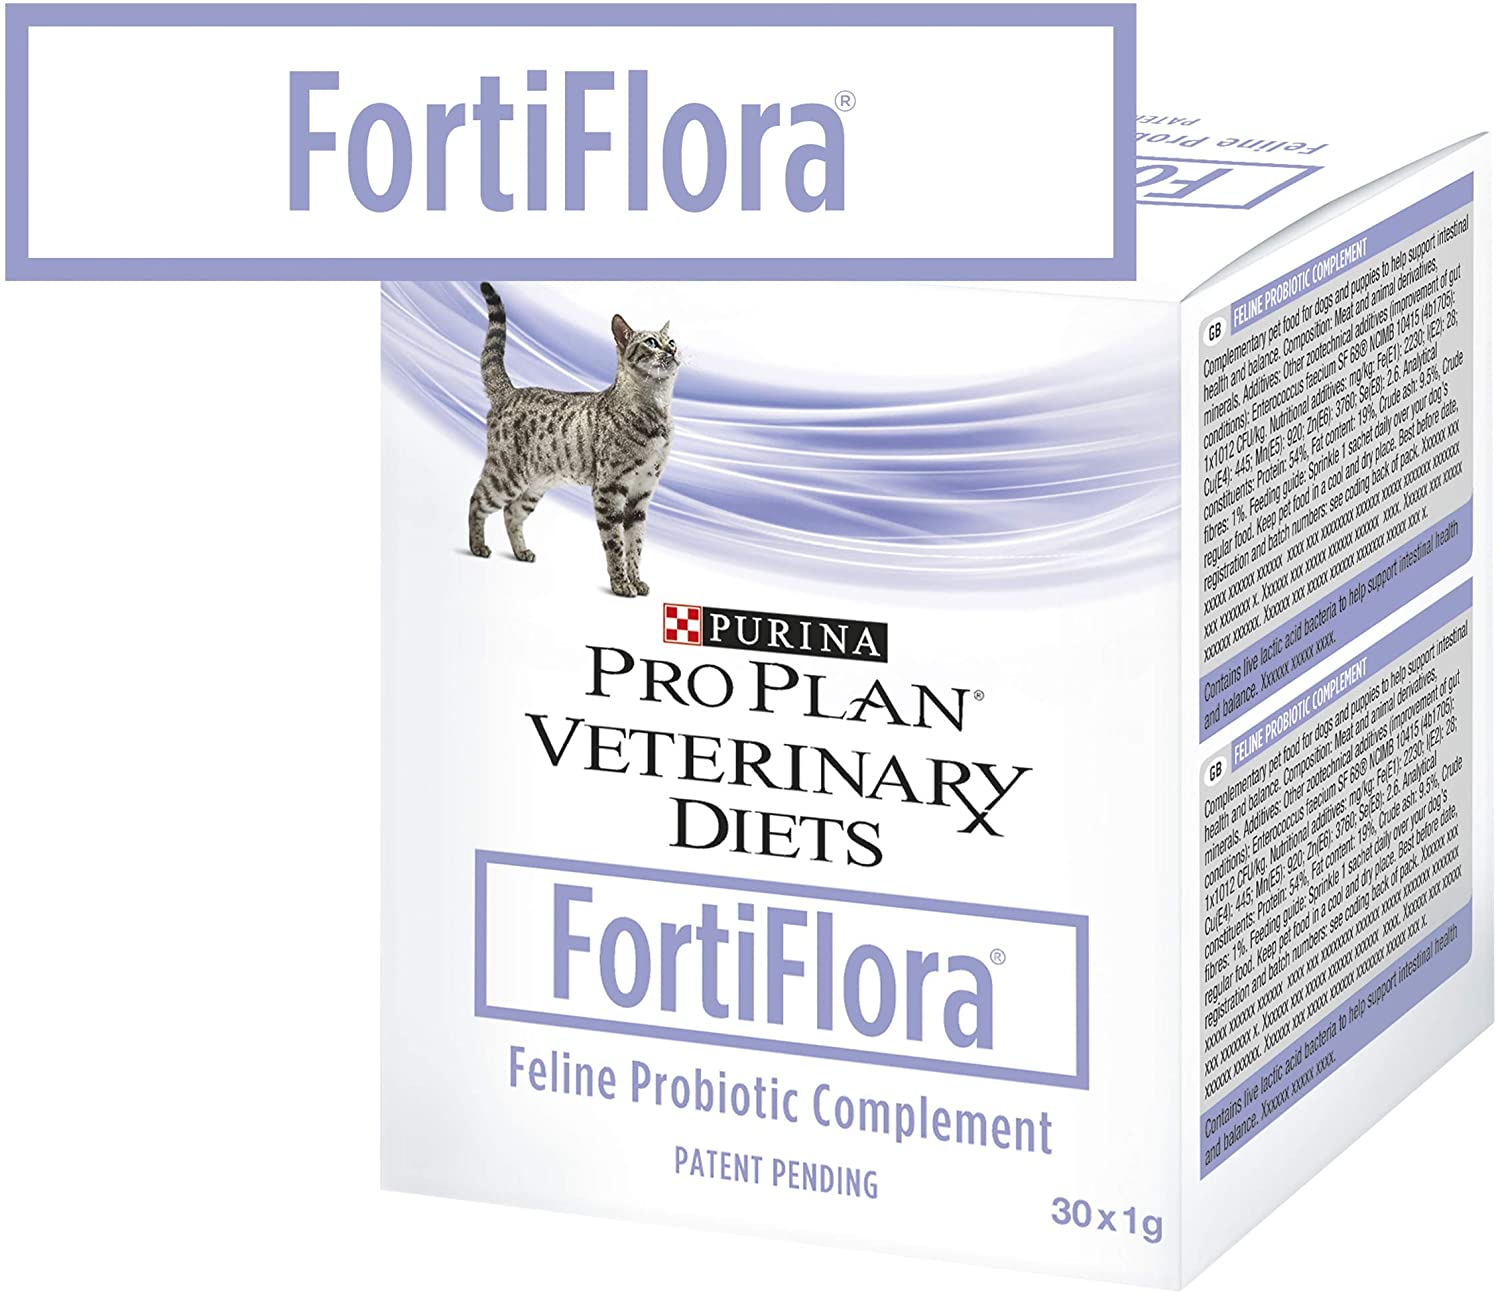  Purina Plan Veterinary Diet Suplemento Alimentario para Gatos - 30 gr 